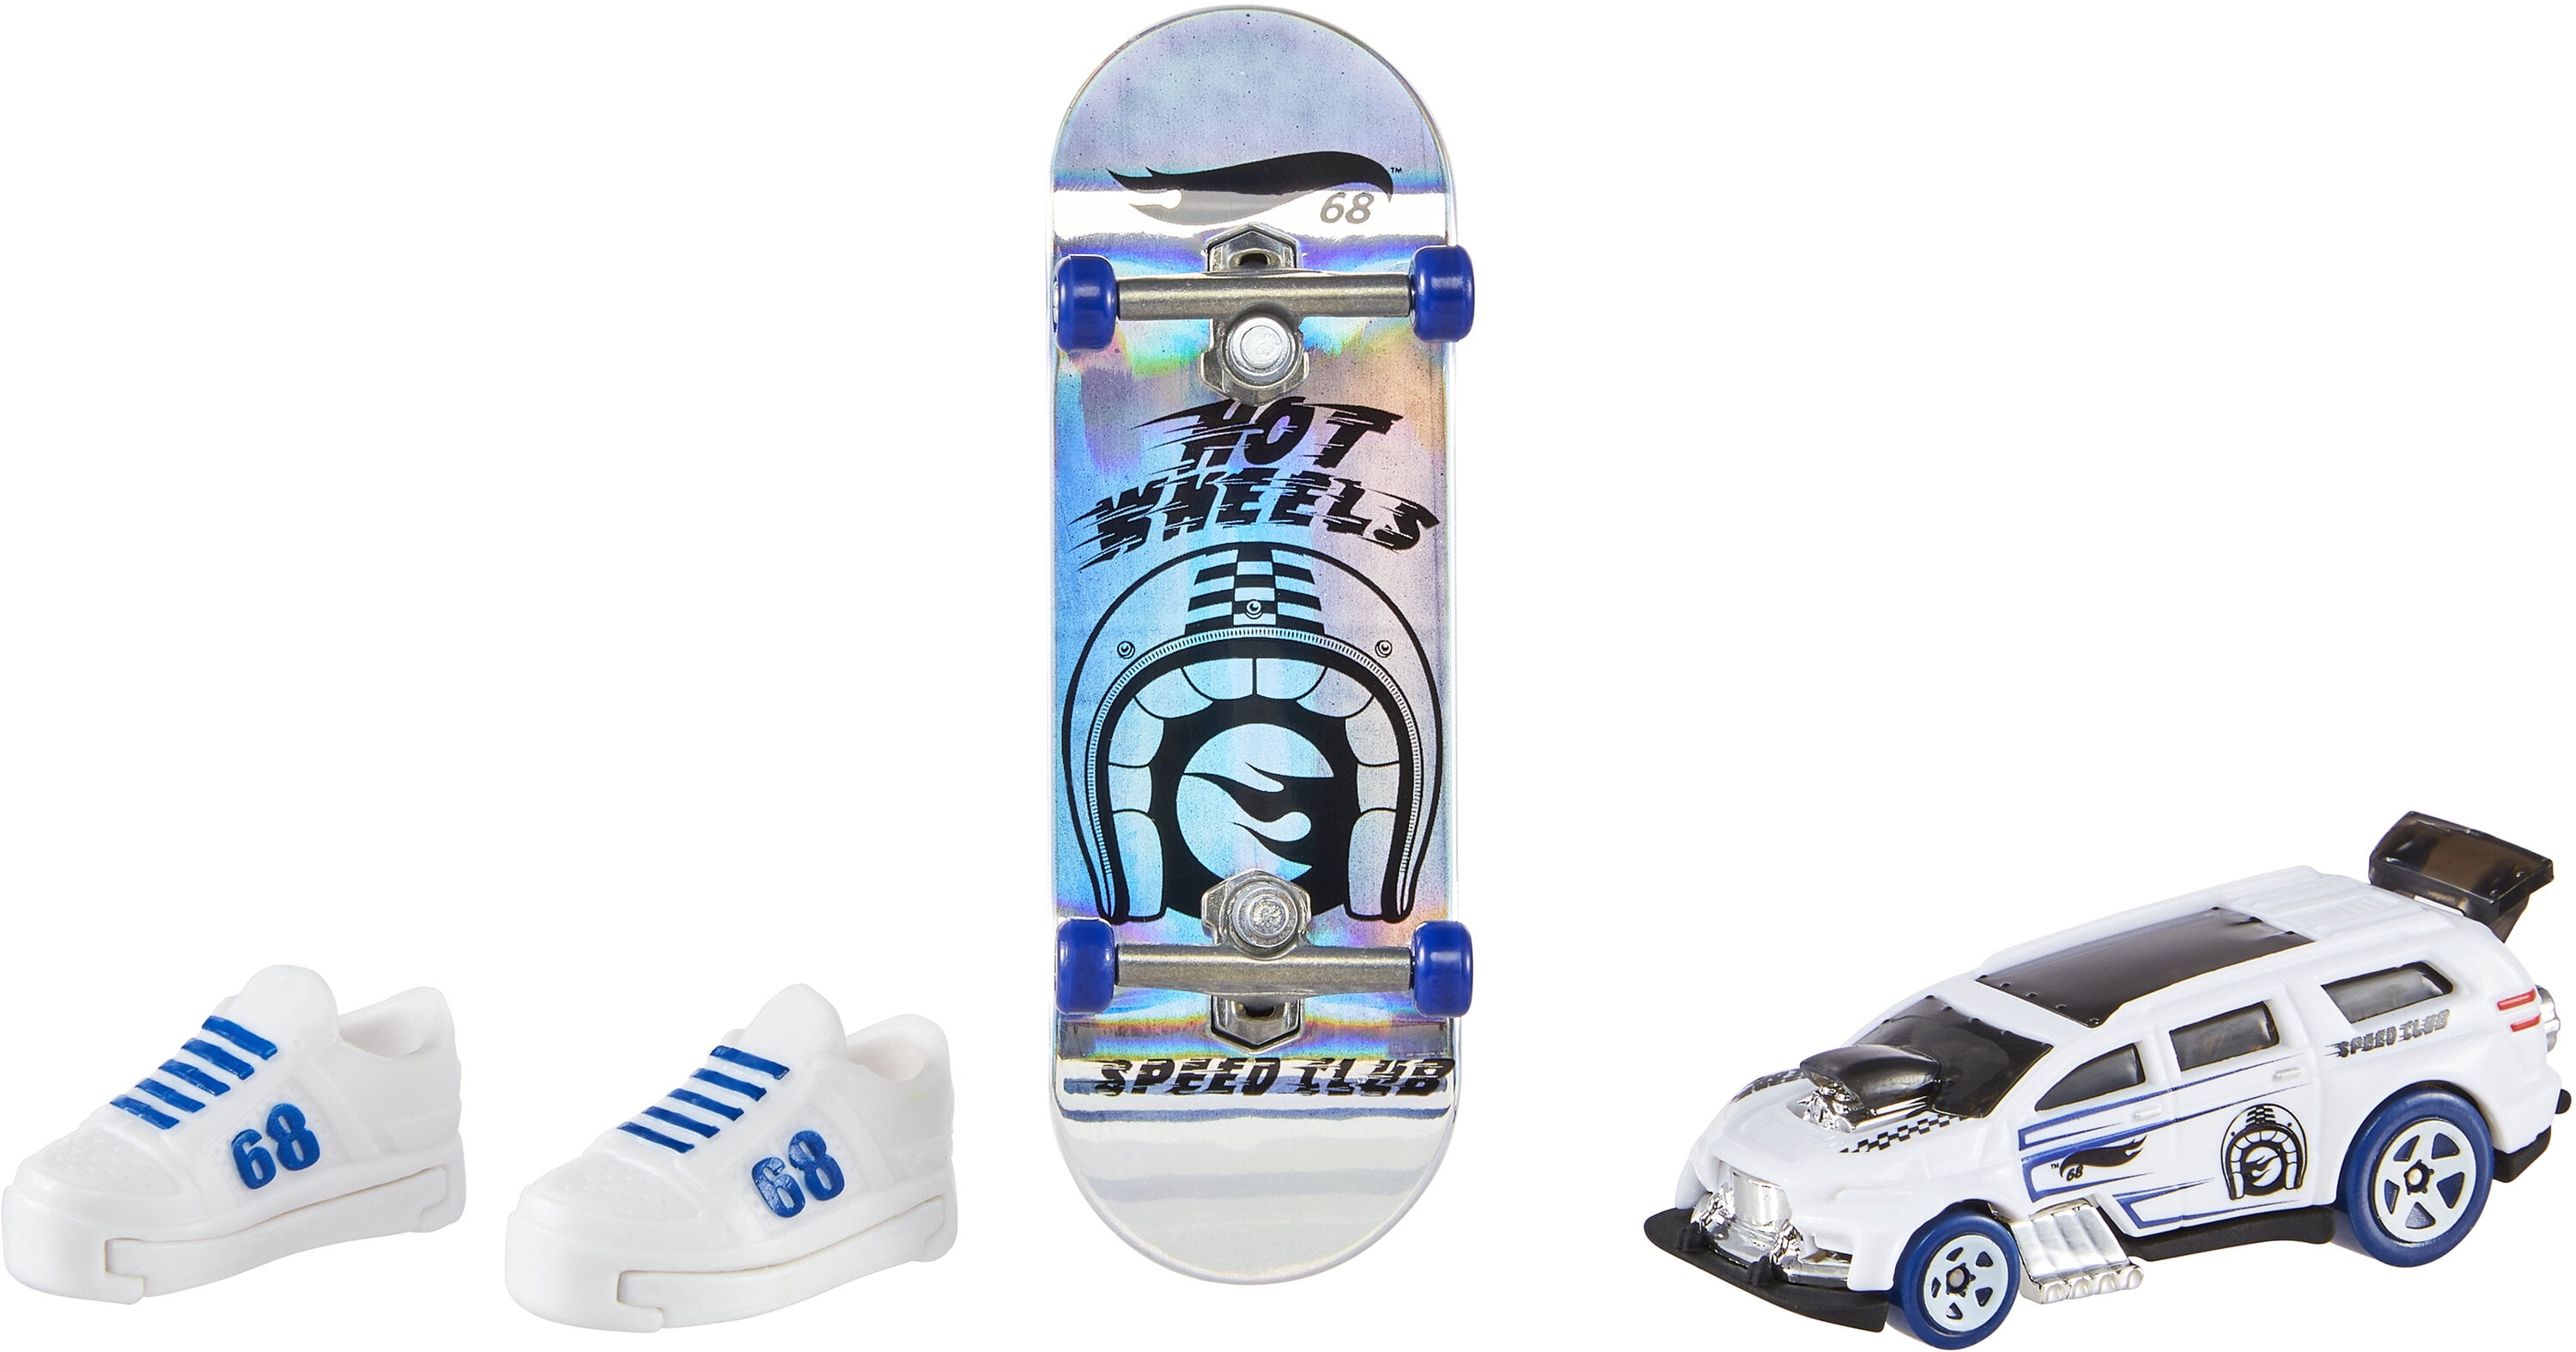 Hot Wheels Skate Tony Hawk Fingerboard & Pair of Skate Shoes (Styles May  Vary)